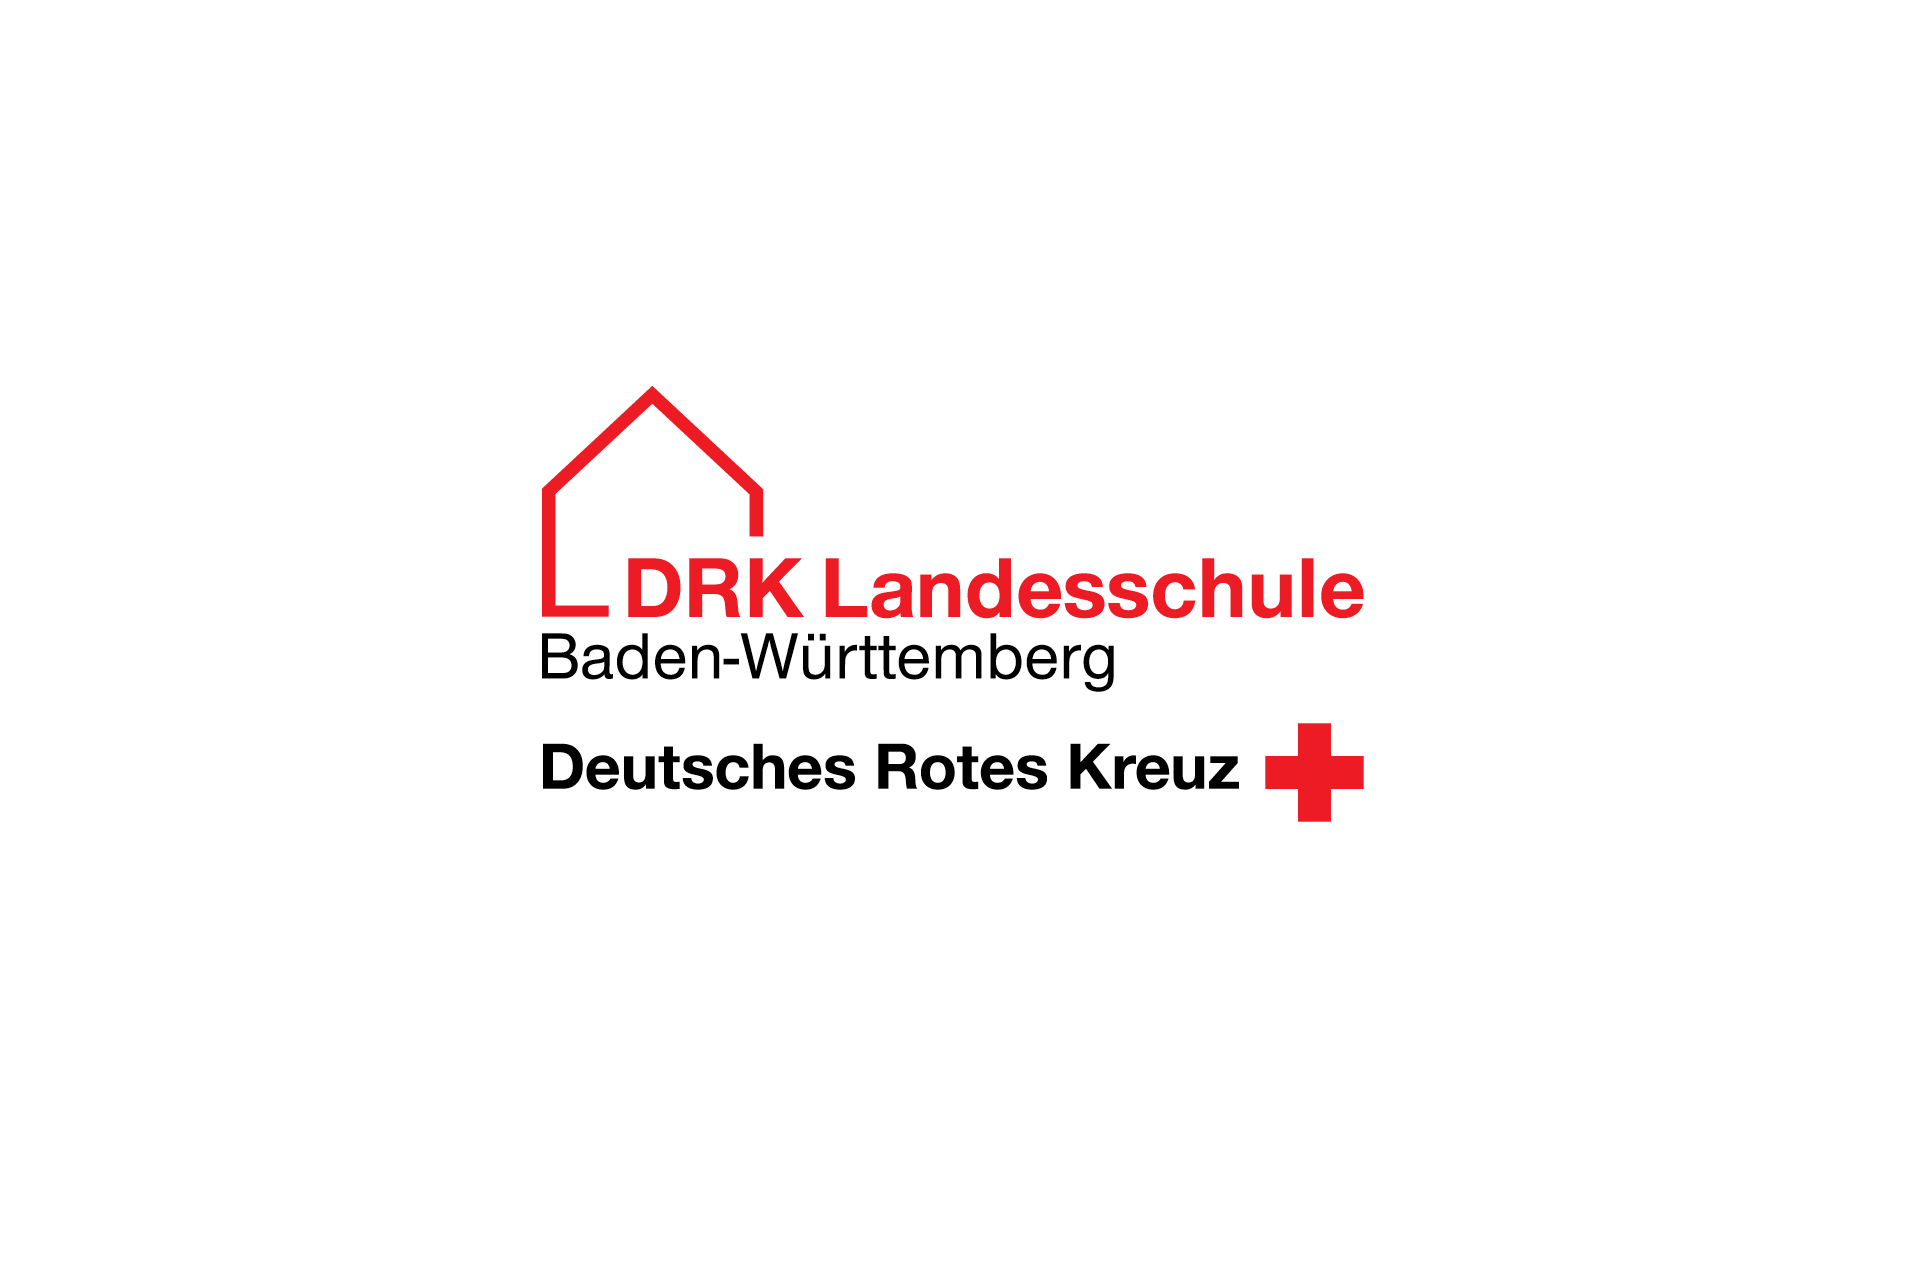 DRK Landesschule Baden-Württemberg, Deutsches Rotes Kreuz